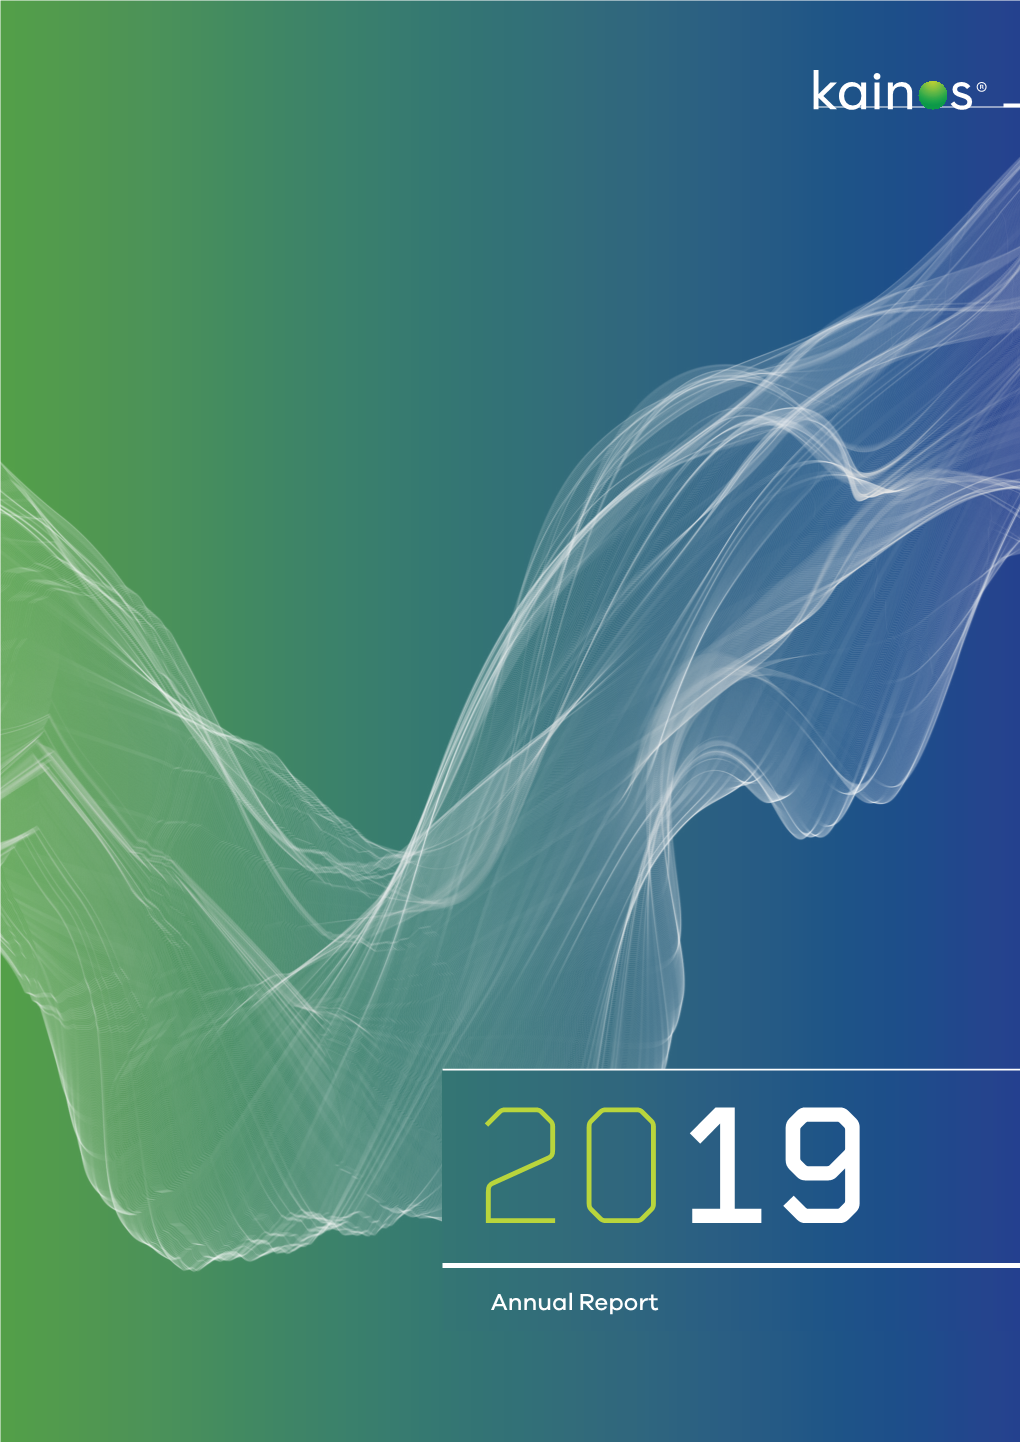 Annual Report (2019)